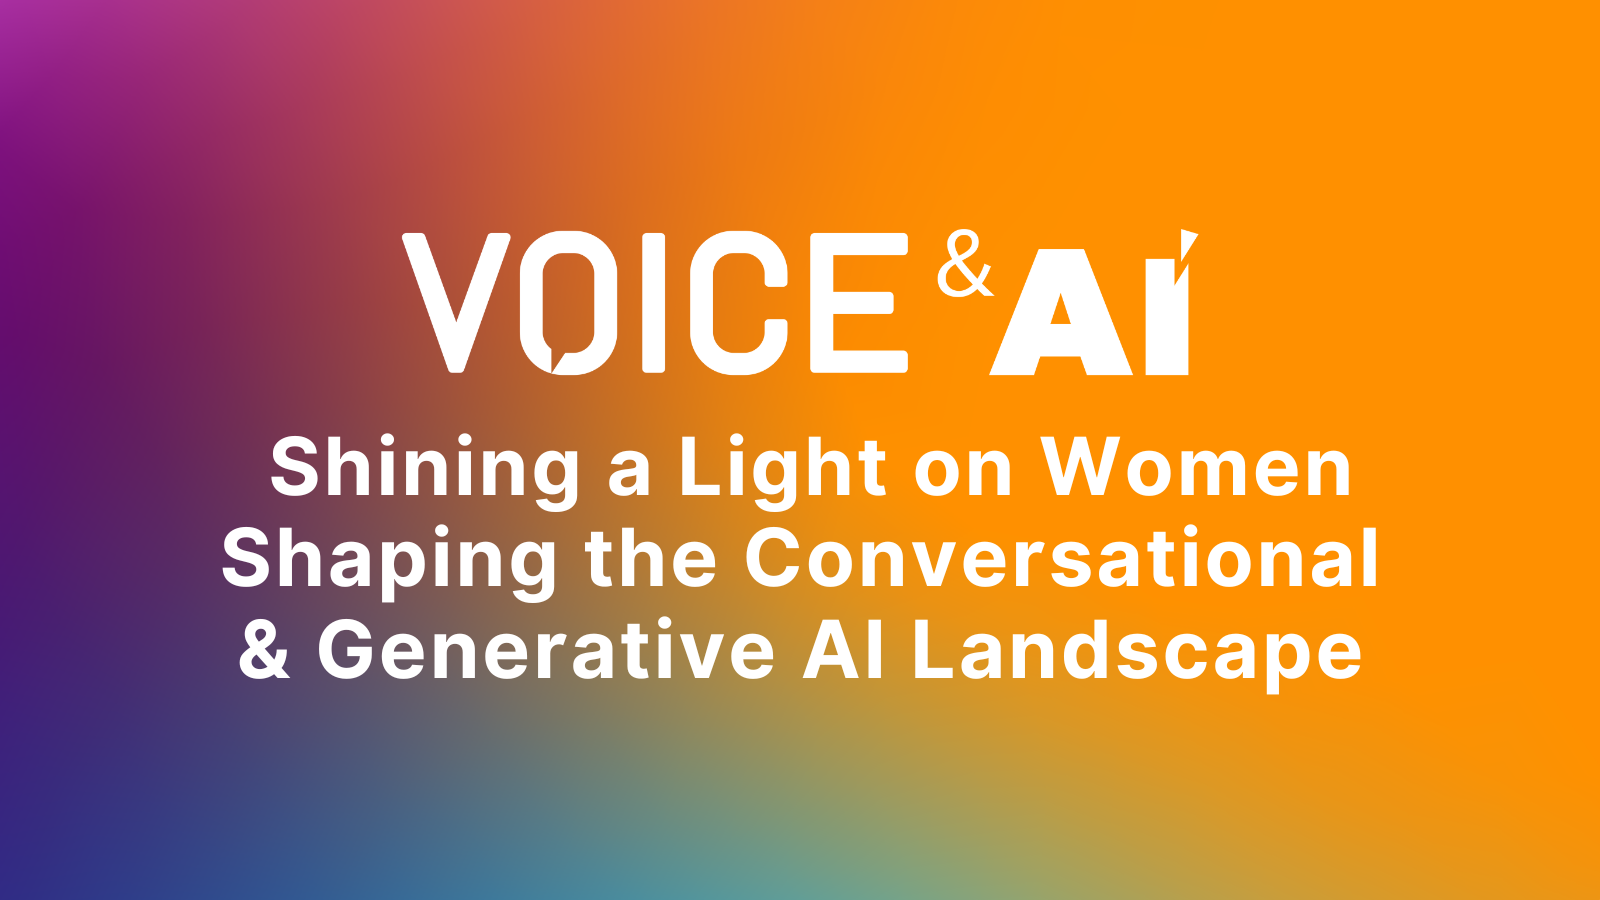 Shining a Light on Women Shaping the Conversational & Generative AI Landscape